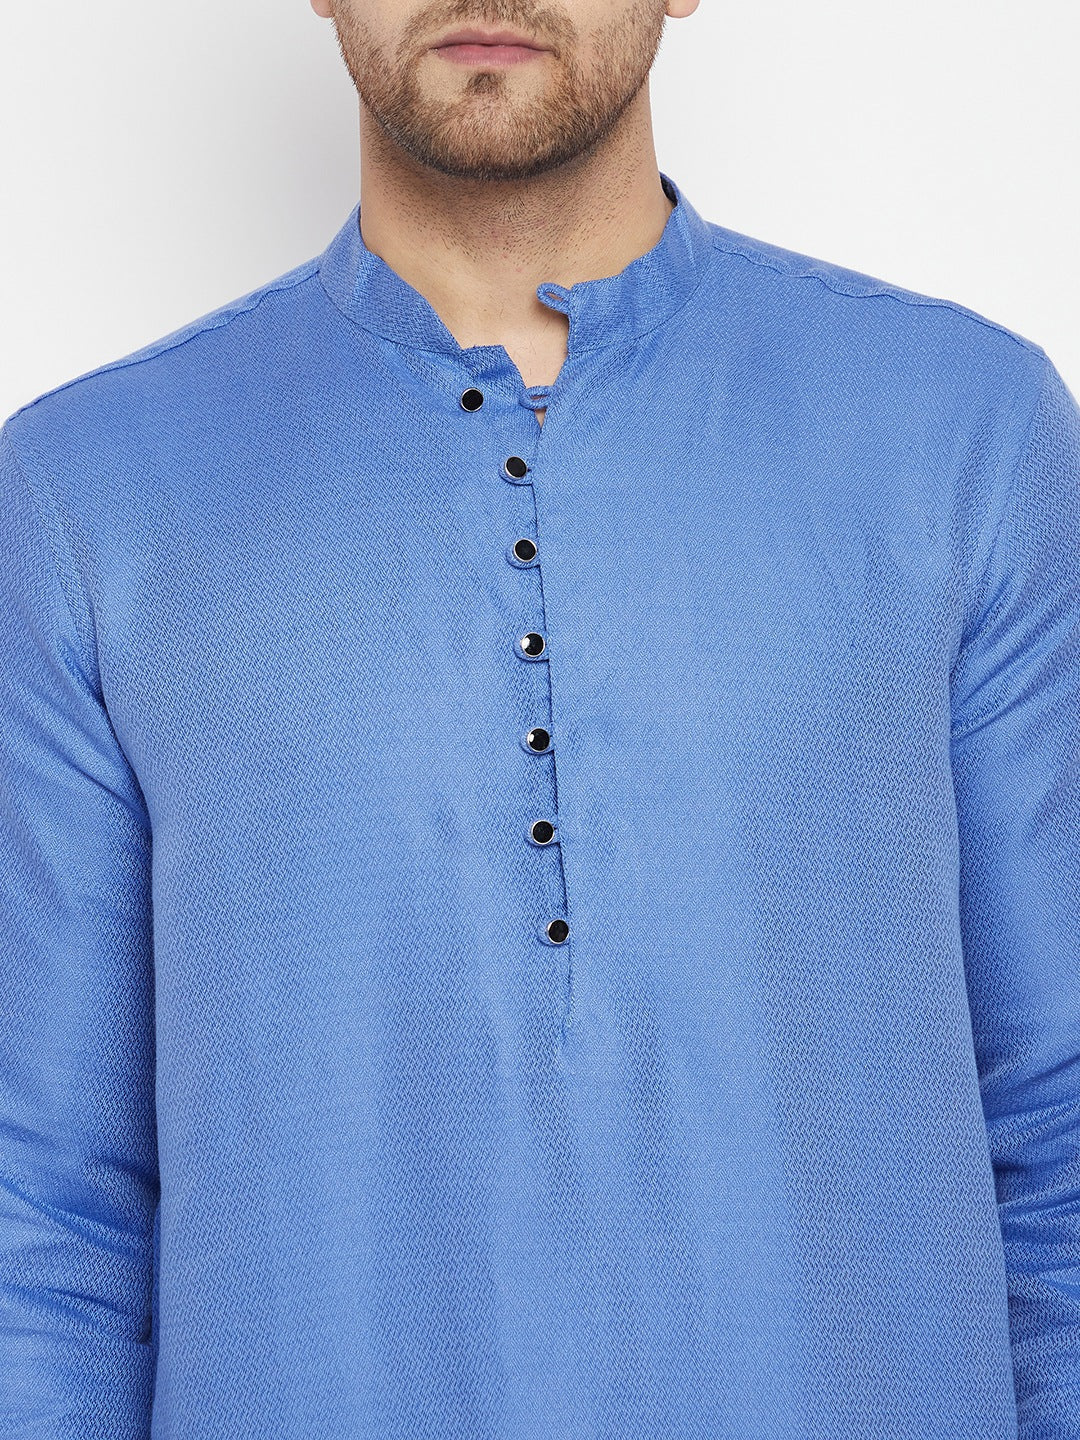 Men's Blue Color Long Kurta with Band Collar - Even Apparels